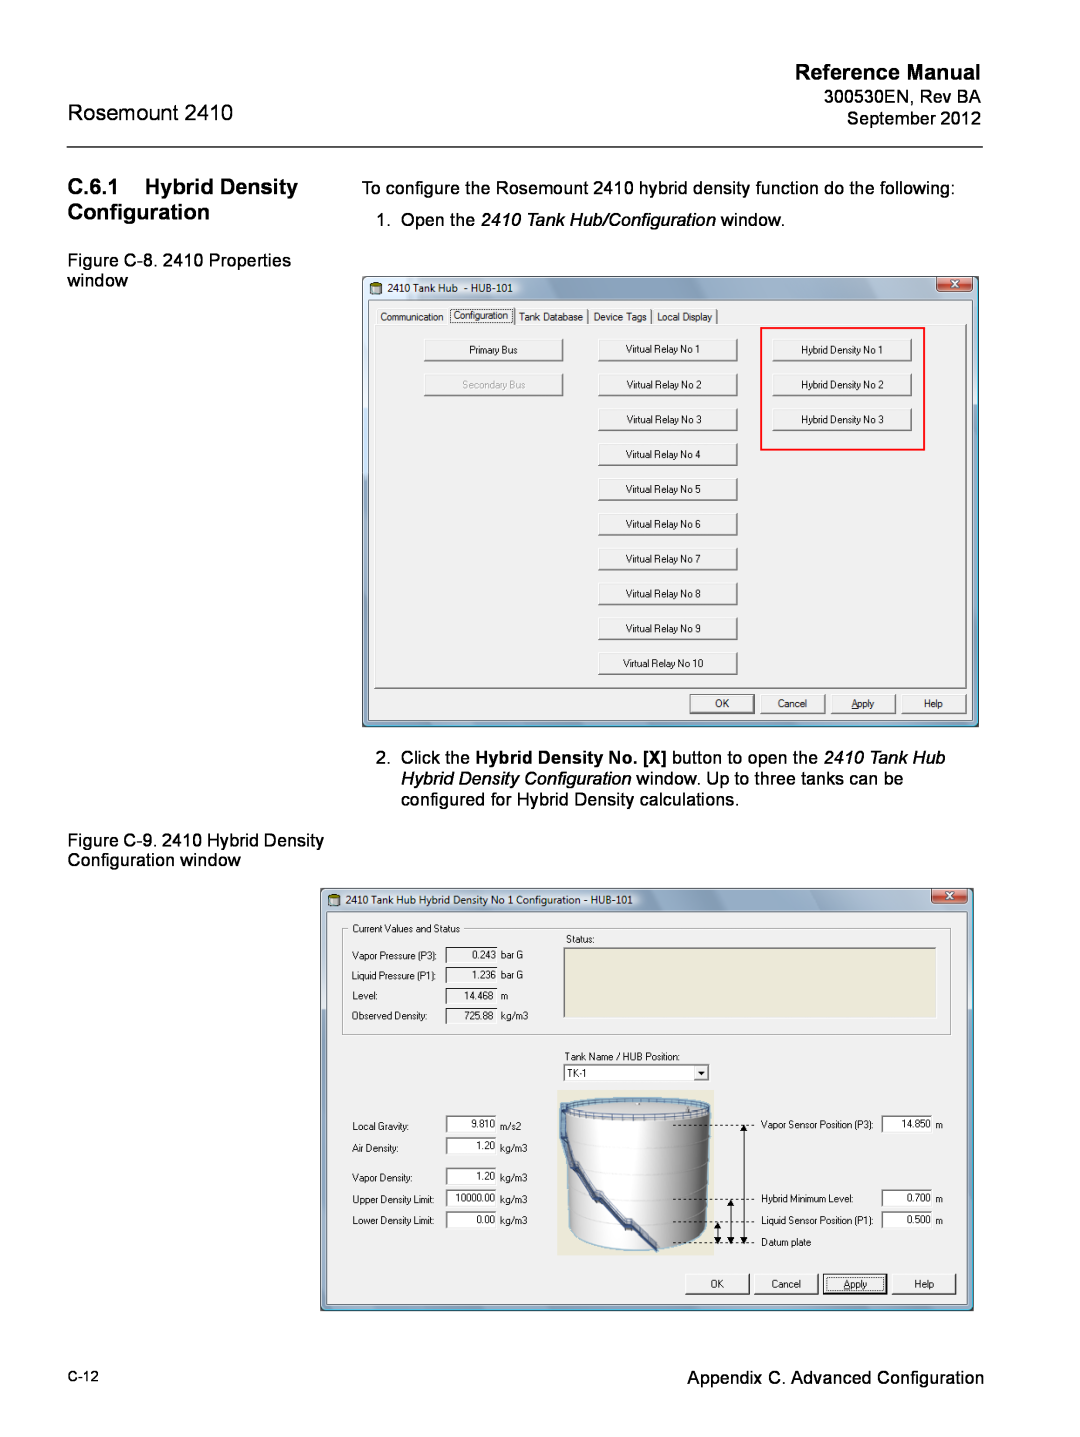 Emerson Process Management Rosemount 2410 manual C.6.1 Hybrid Density, Configuration, Reference Manual, C-12 